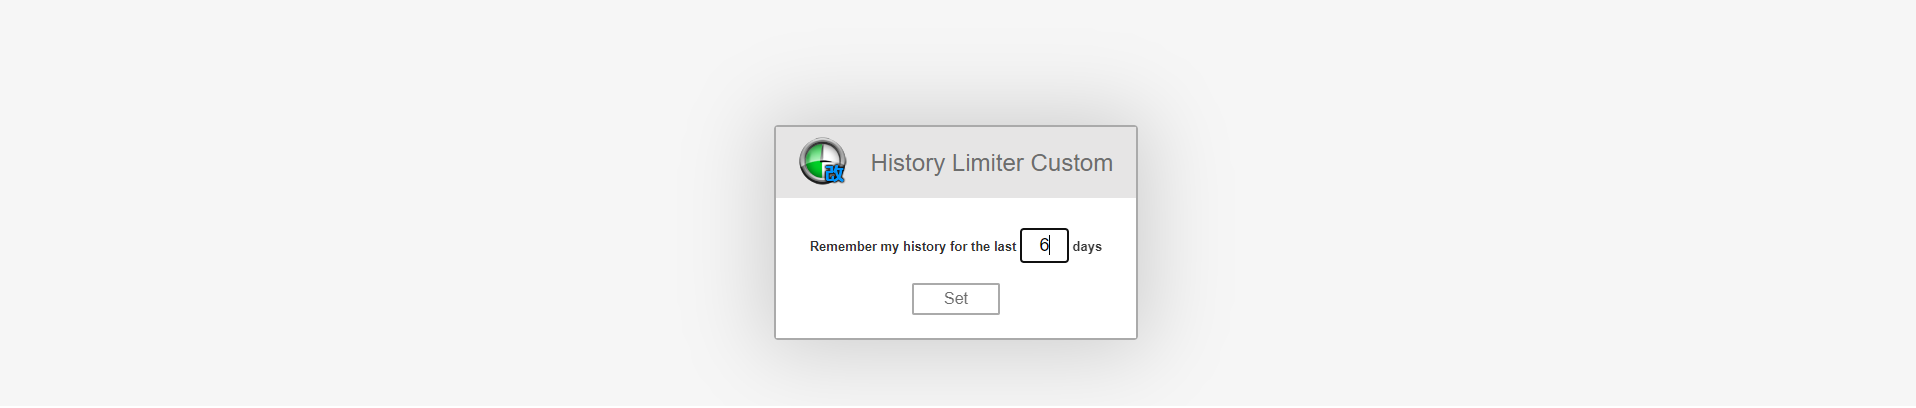 History Limiter Custom 插件使用教程